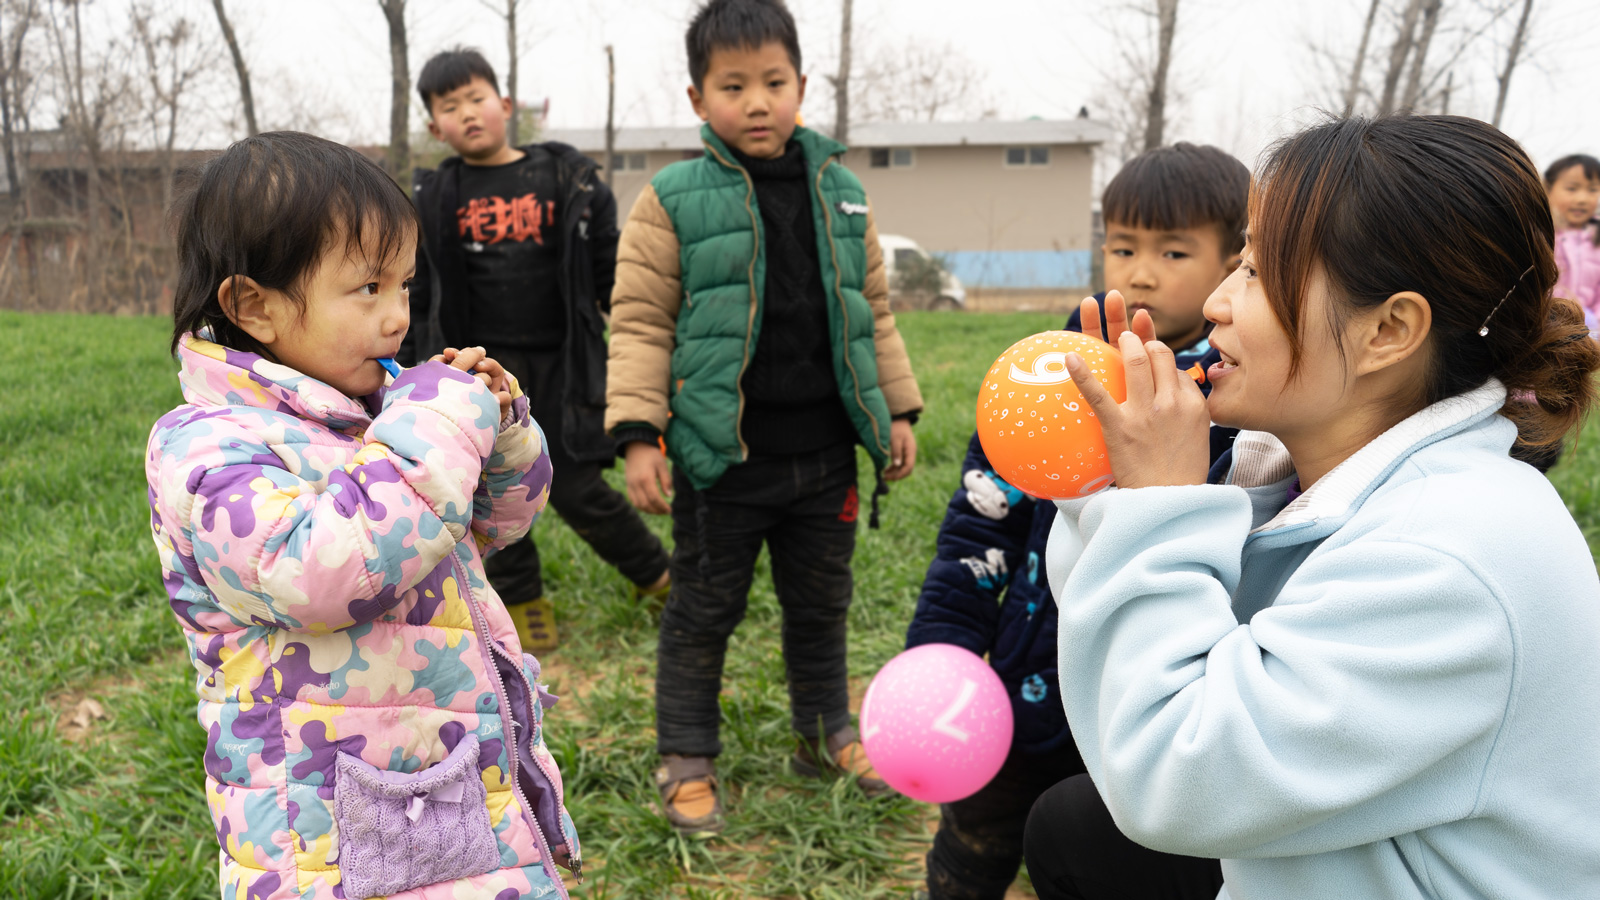 Zhenzhen blows a balloon with her teacher